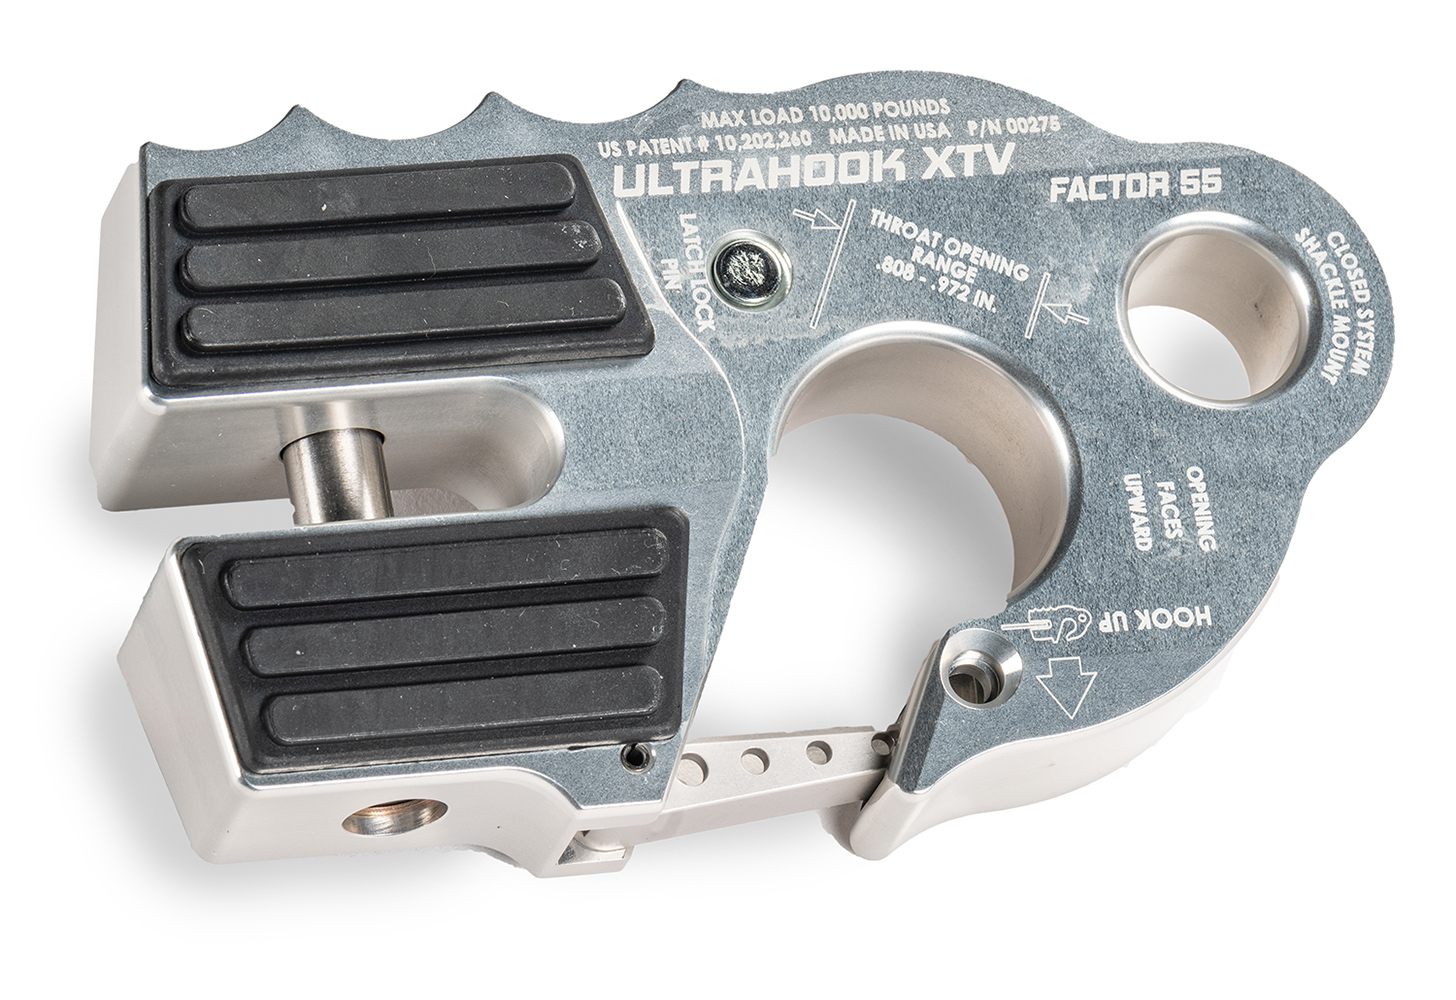 Factor 55 00275-02 Ultrahook XTV Winch Hook